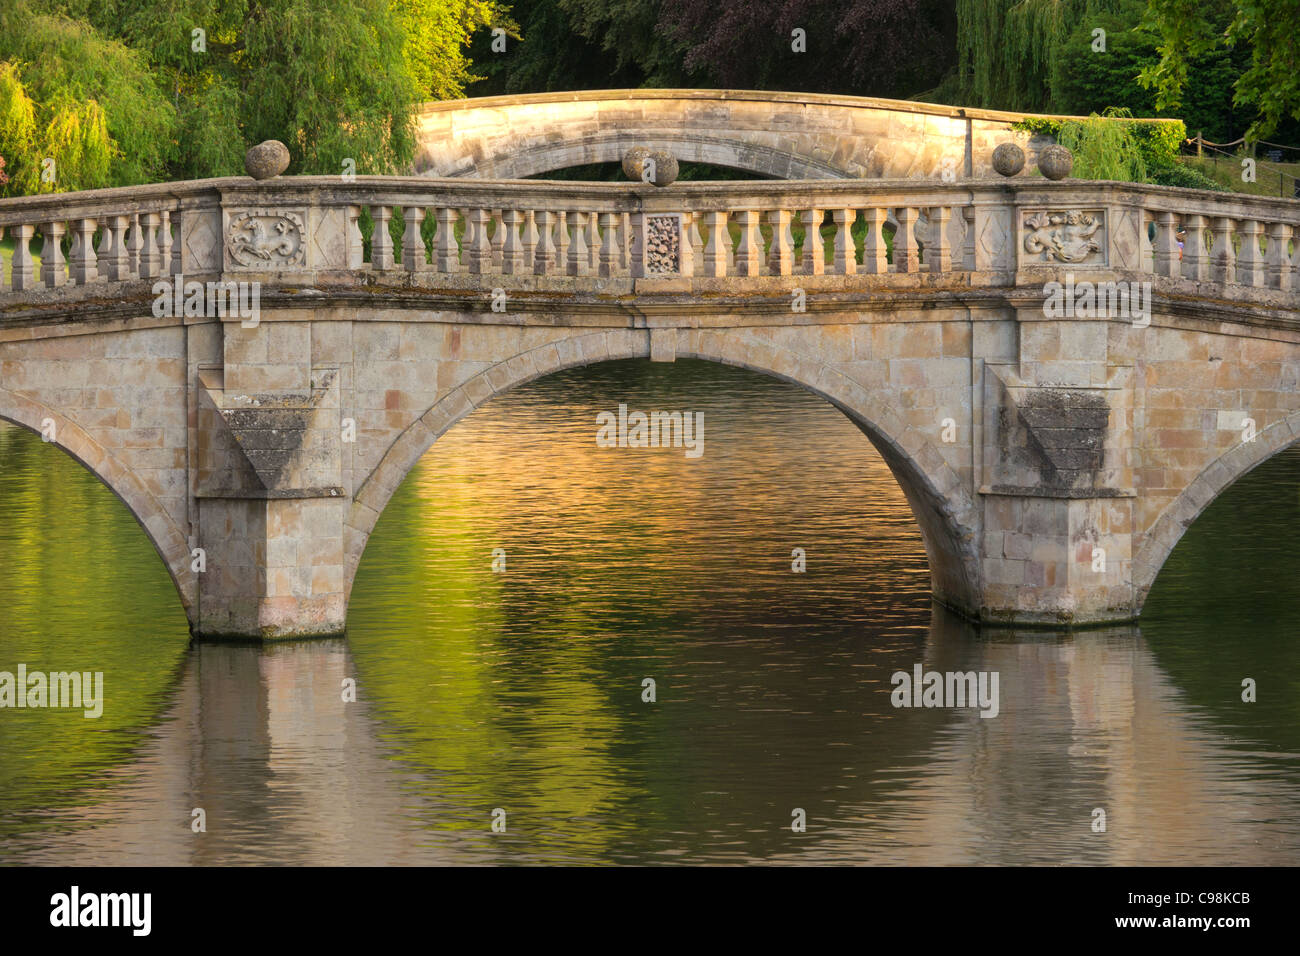 Promenades en barque sur la rivière Cam, Cambridge, Cambridgeshire, UK Banque D'Images